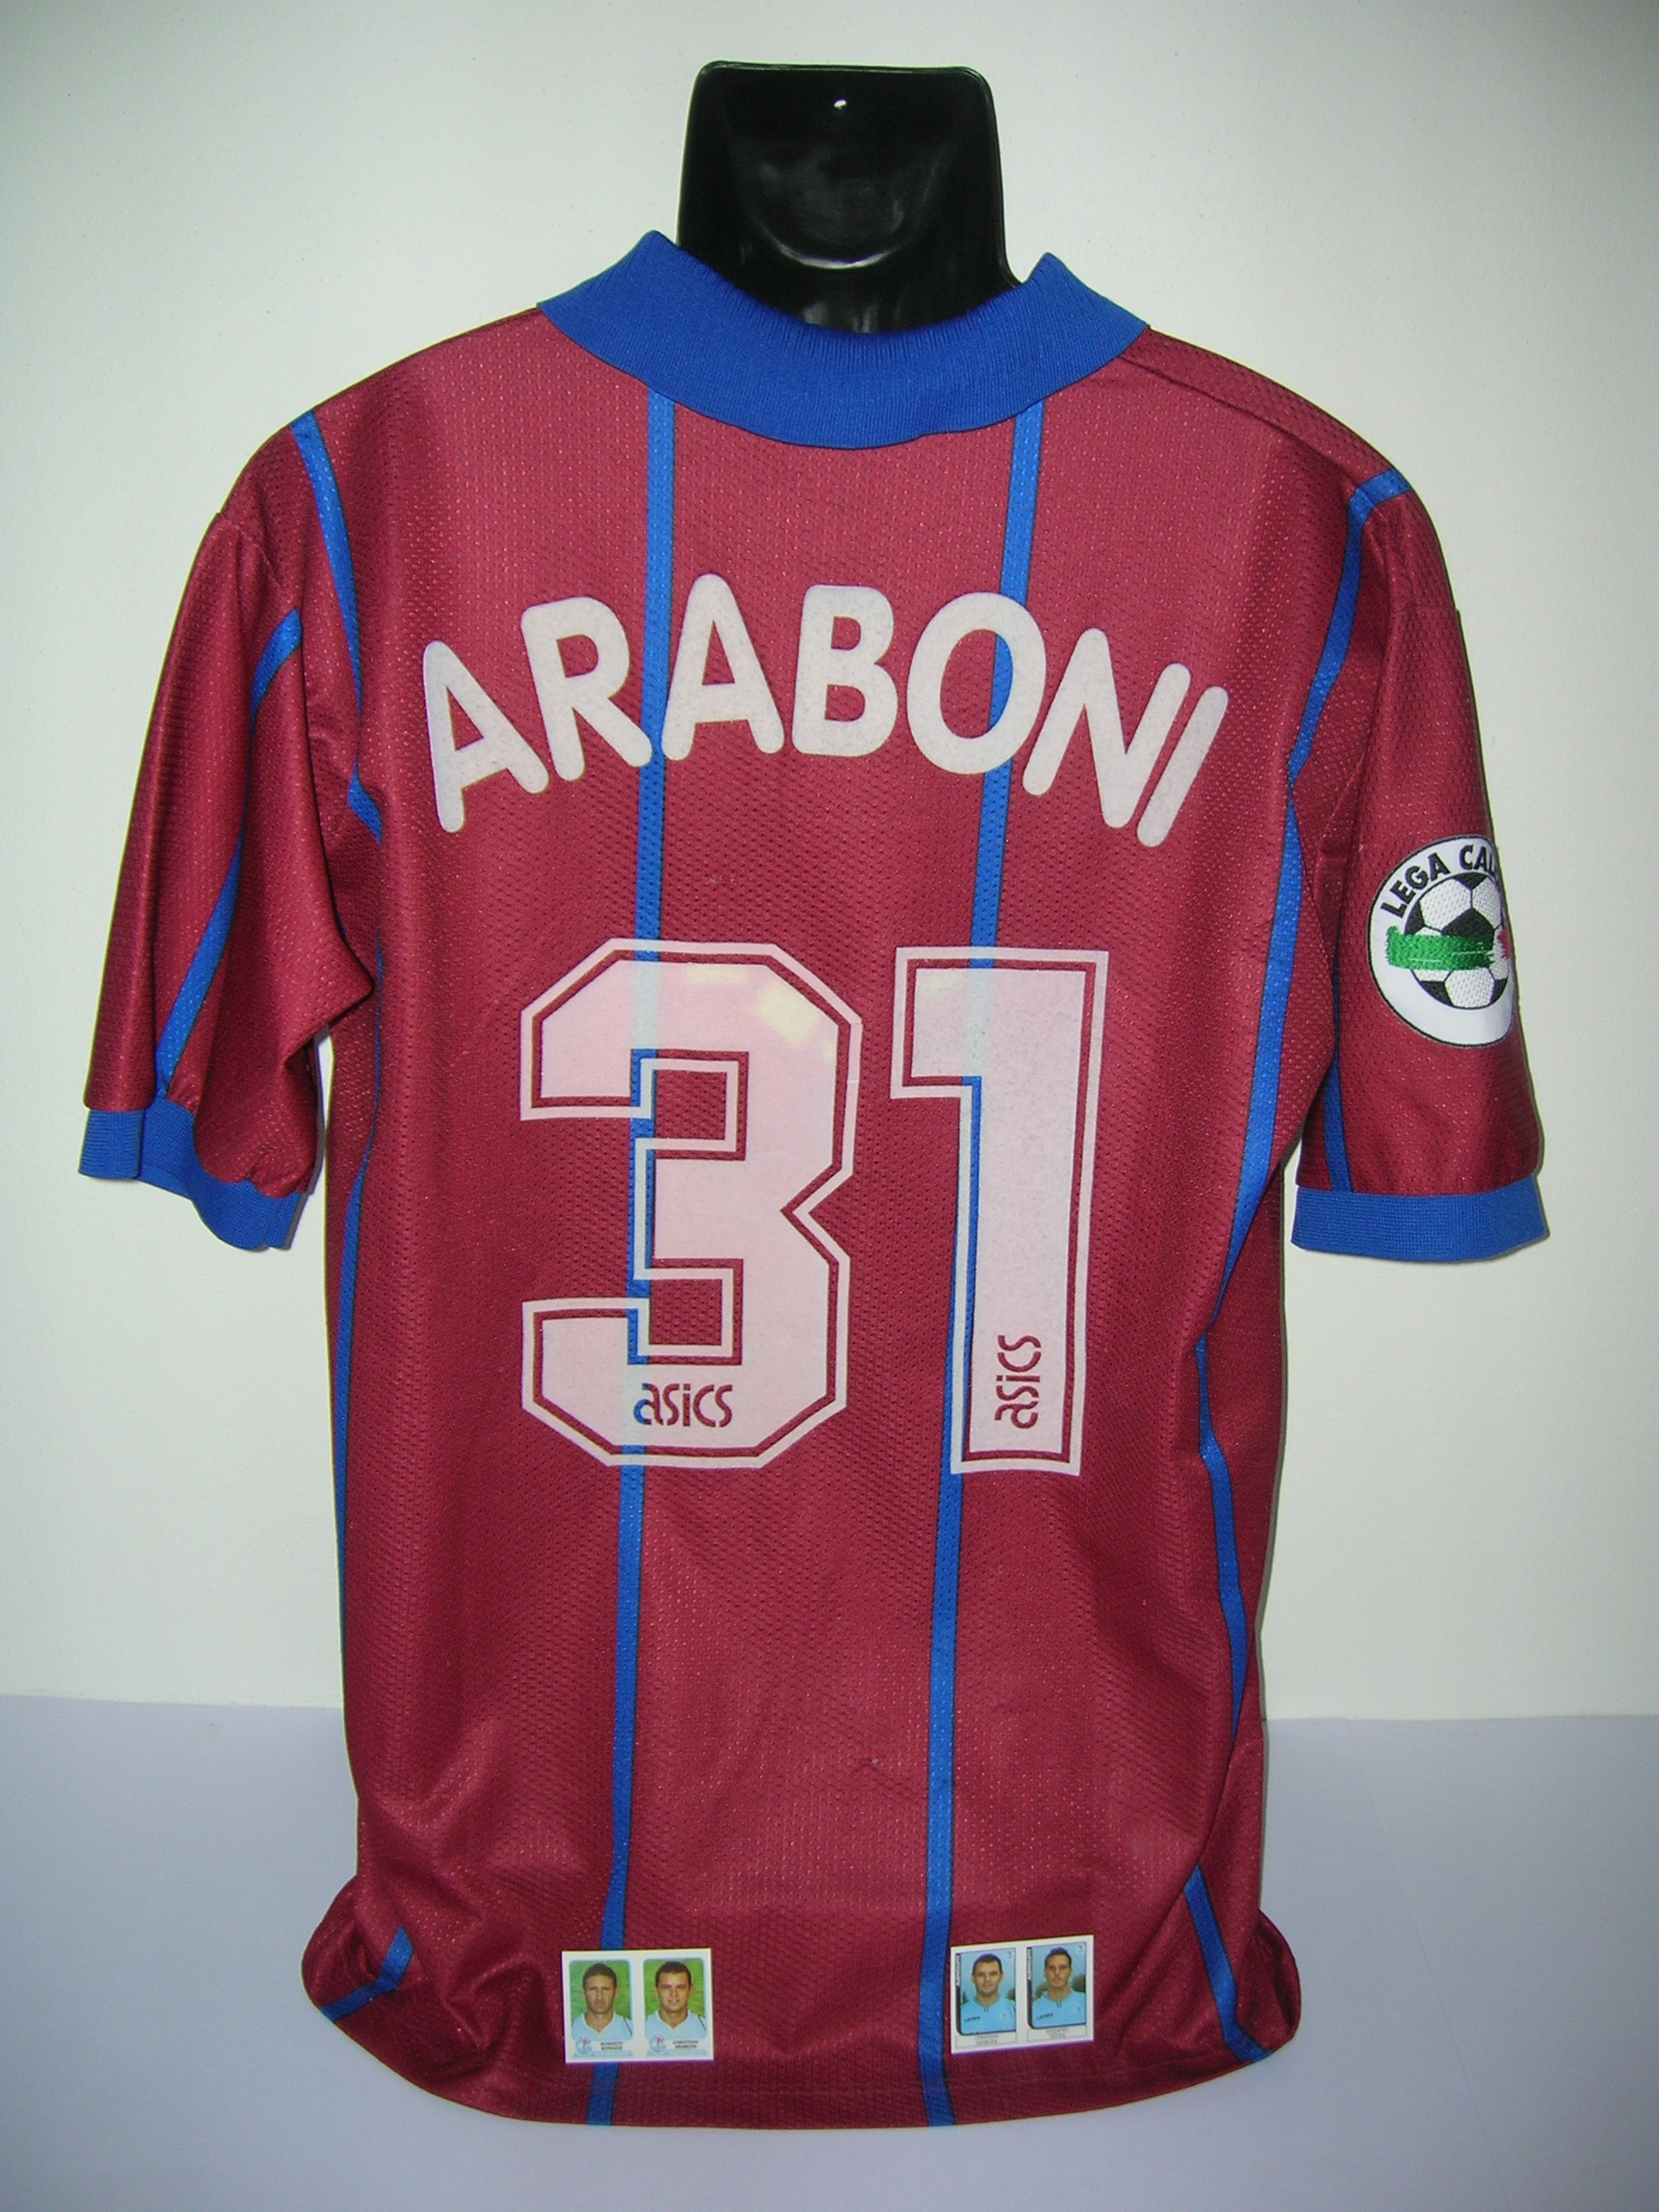 Araboni  C.  n.31  Reggiana  1996-97  B-1